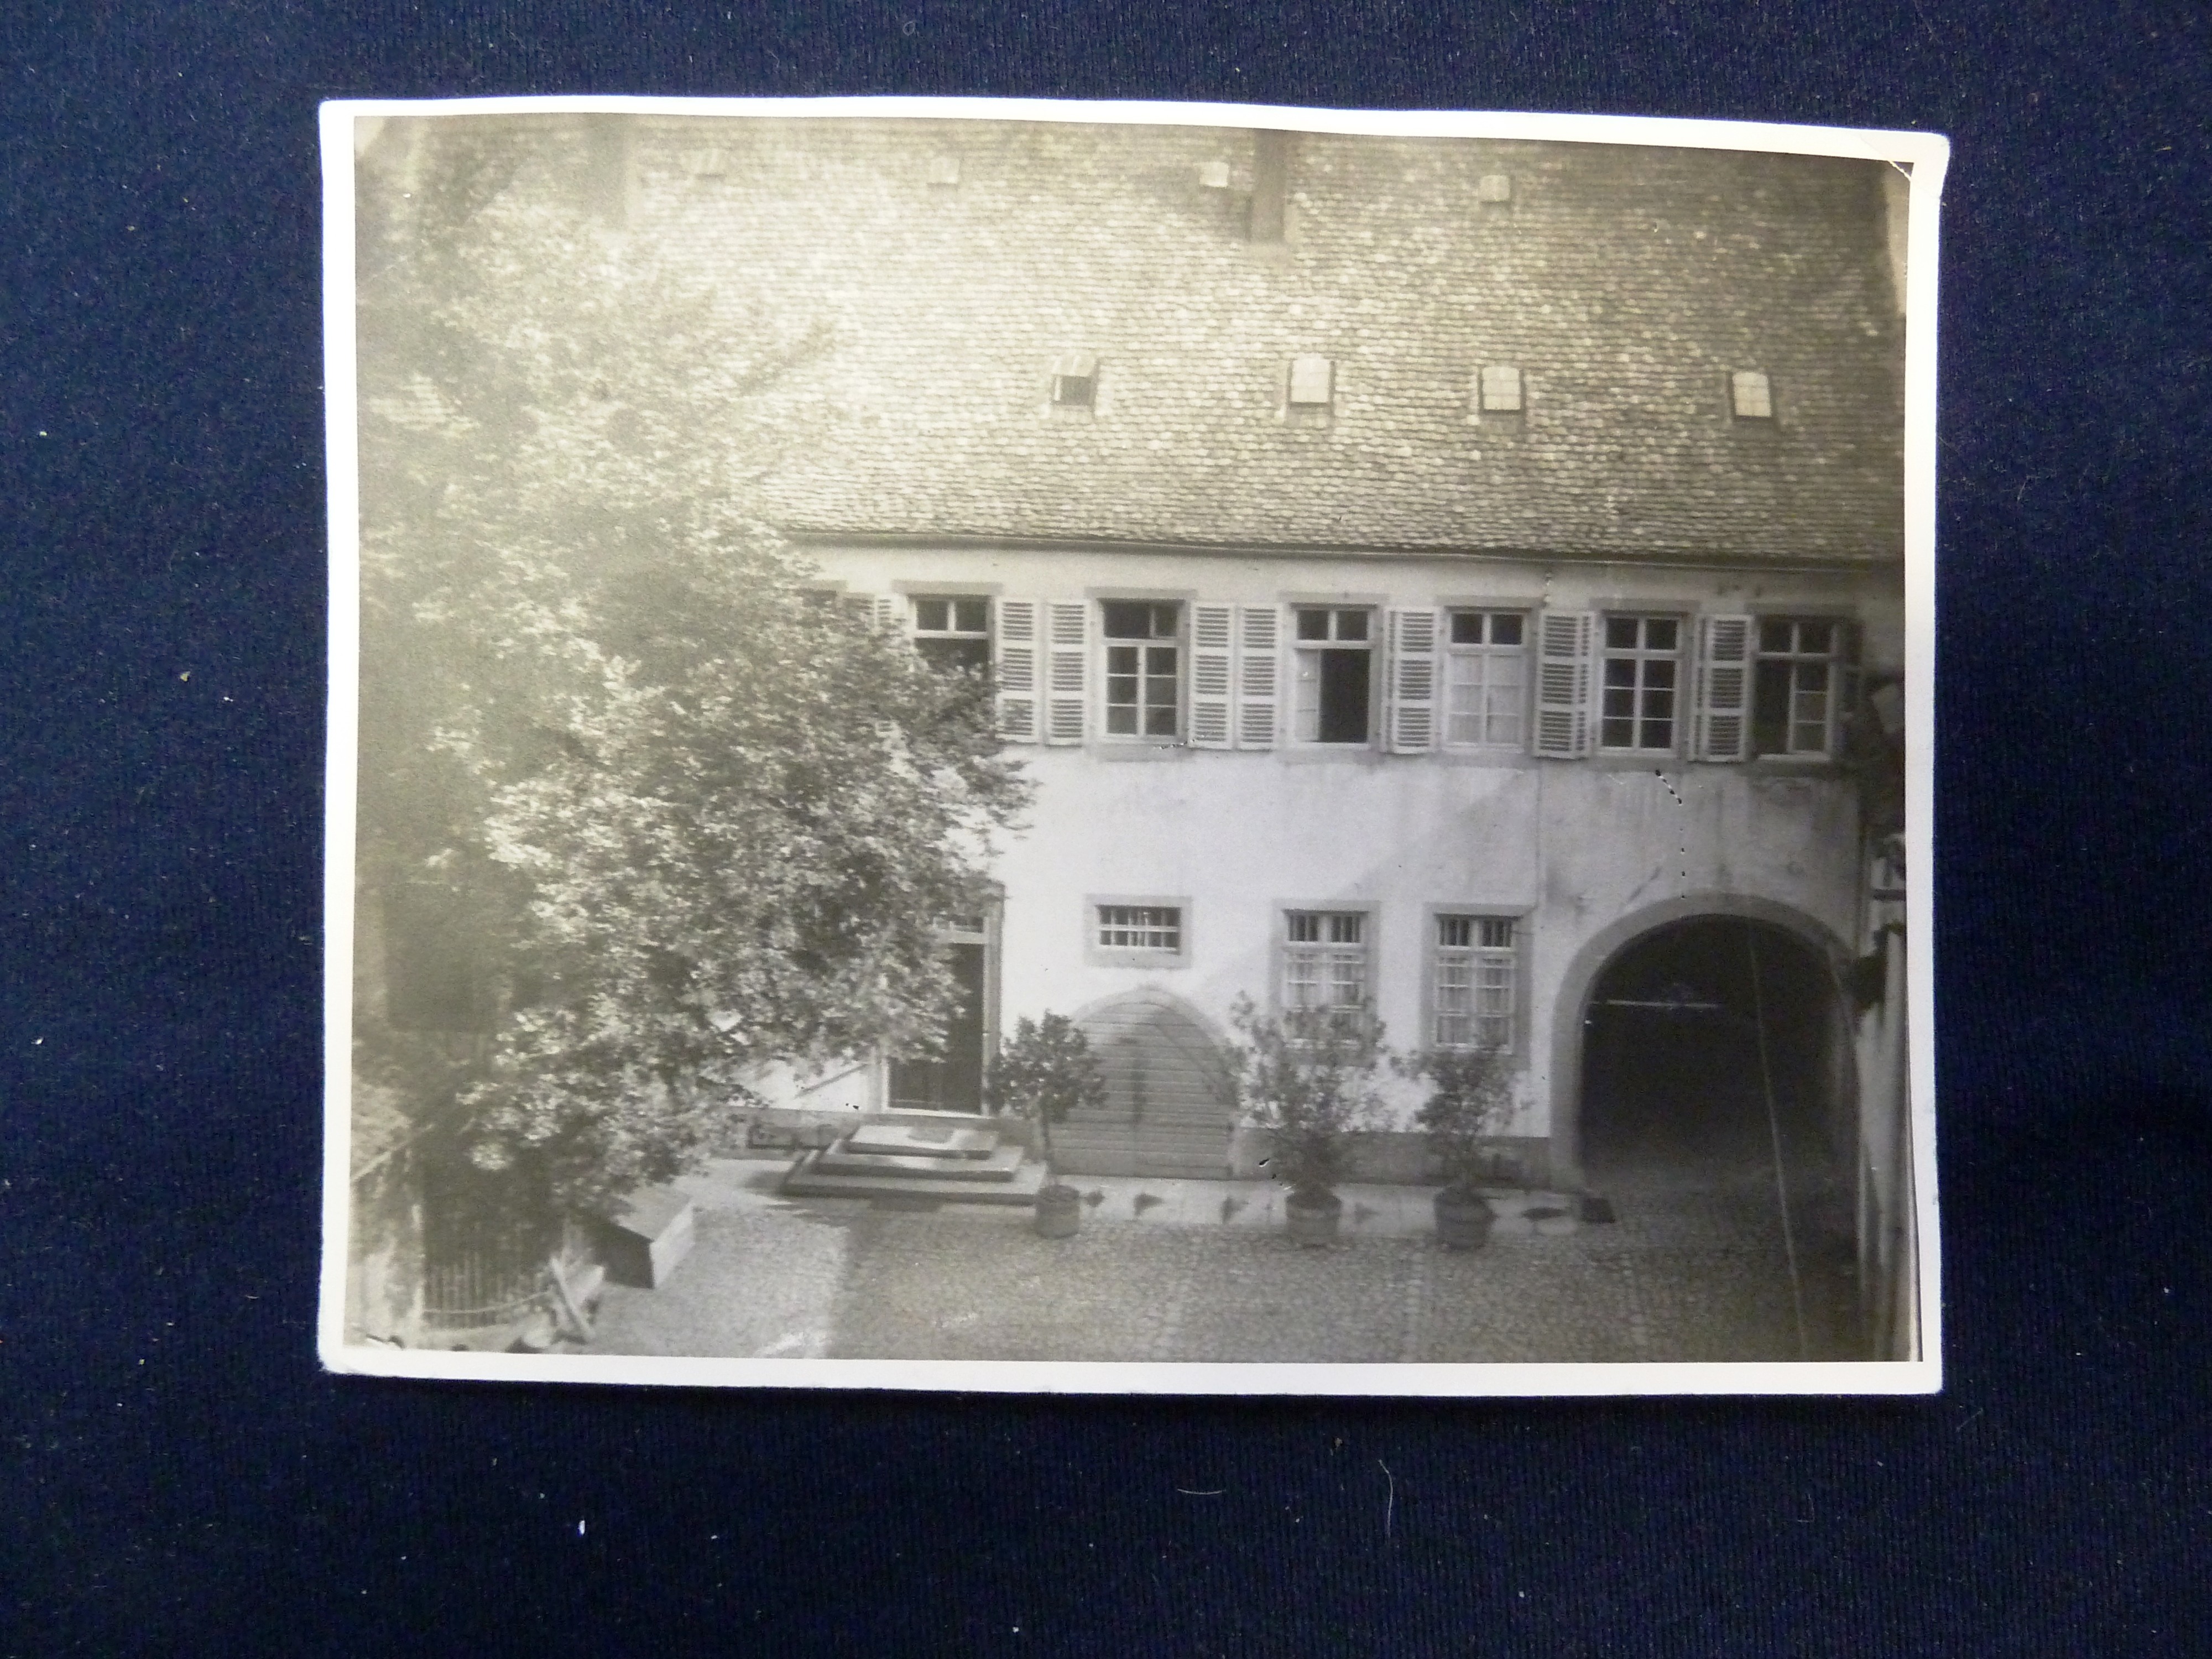 S-W-Bild; Fotografie von Haus, Anwesen; um 1910 (Stadtmuseum Bad Dürkheim, Museumsgesellschaft Bad Dürkheim e.V. CC BY-NC-SA)